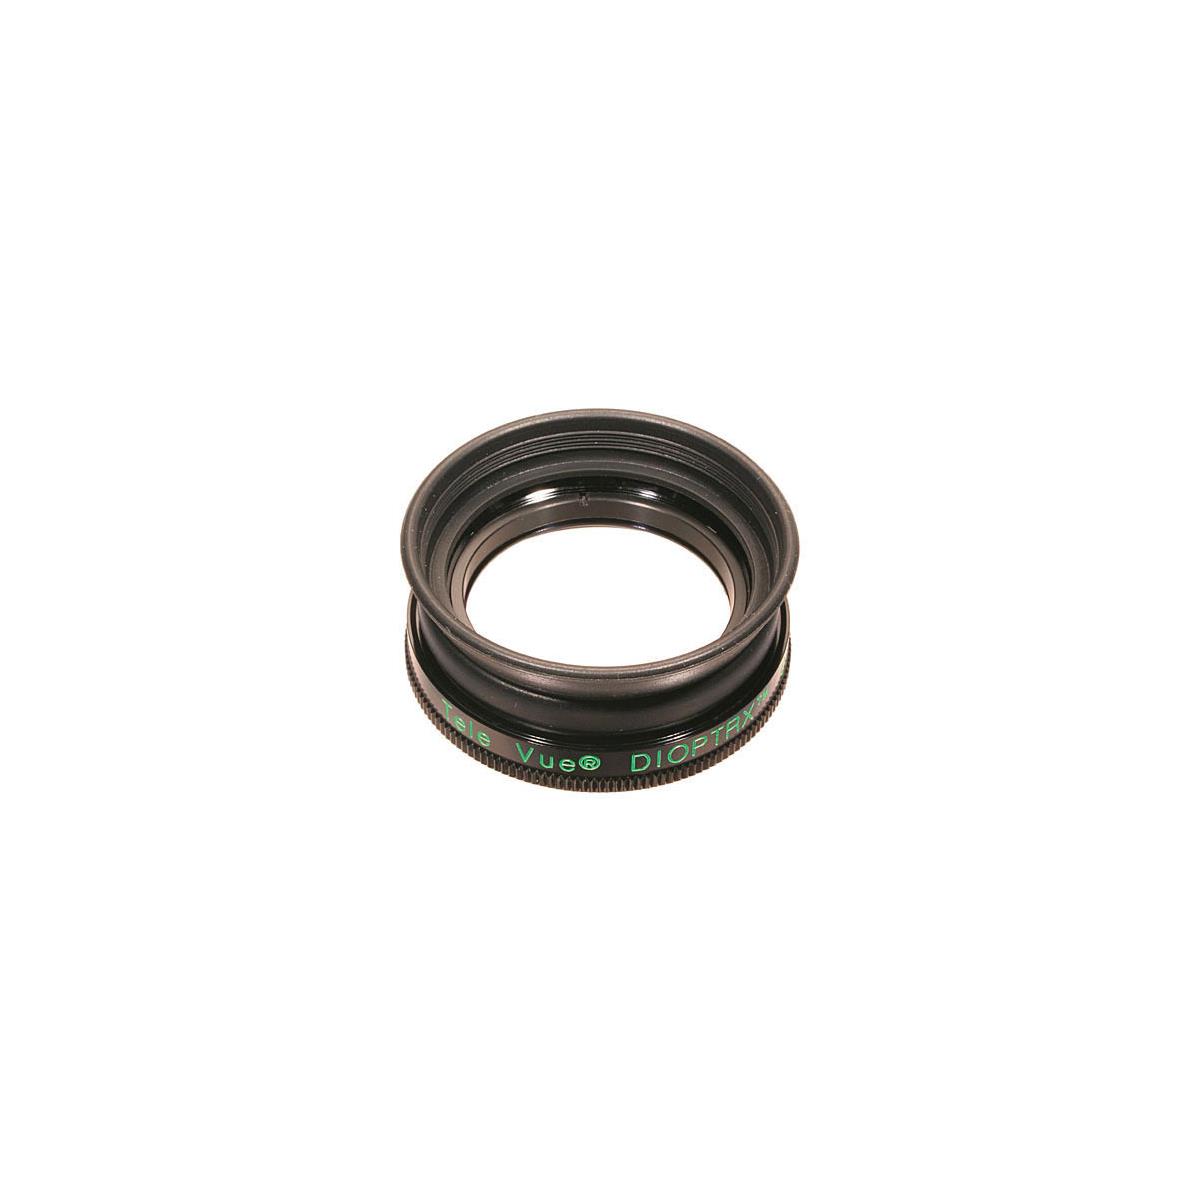 

Tele Vue Dioptrx Astigmatism Correcting Lens - 3.50